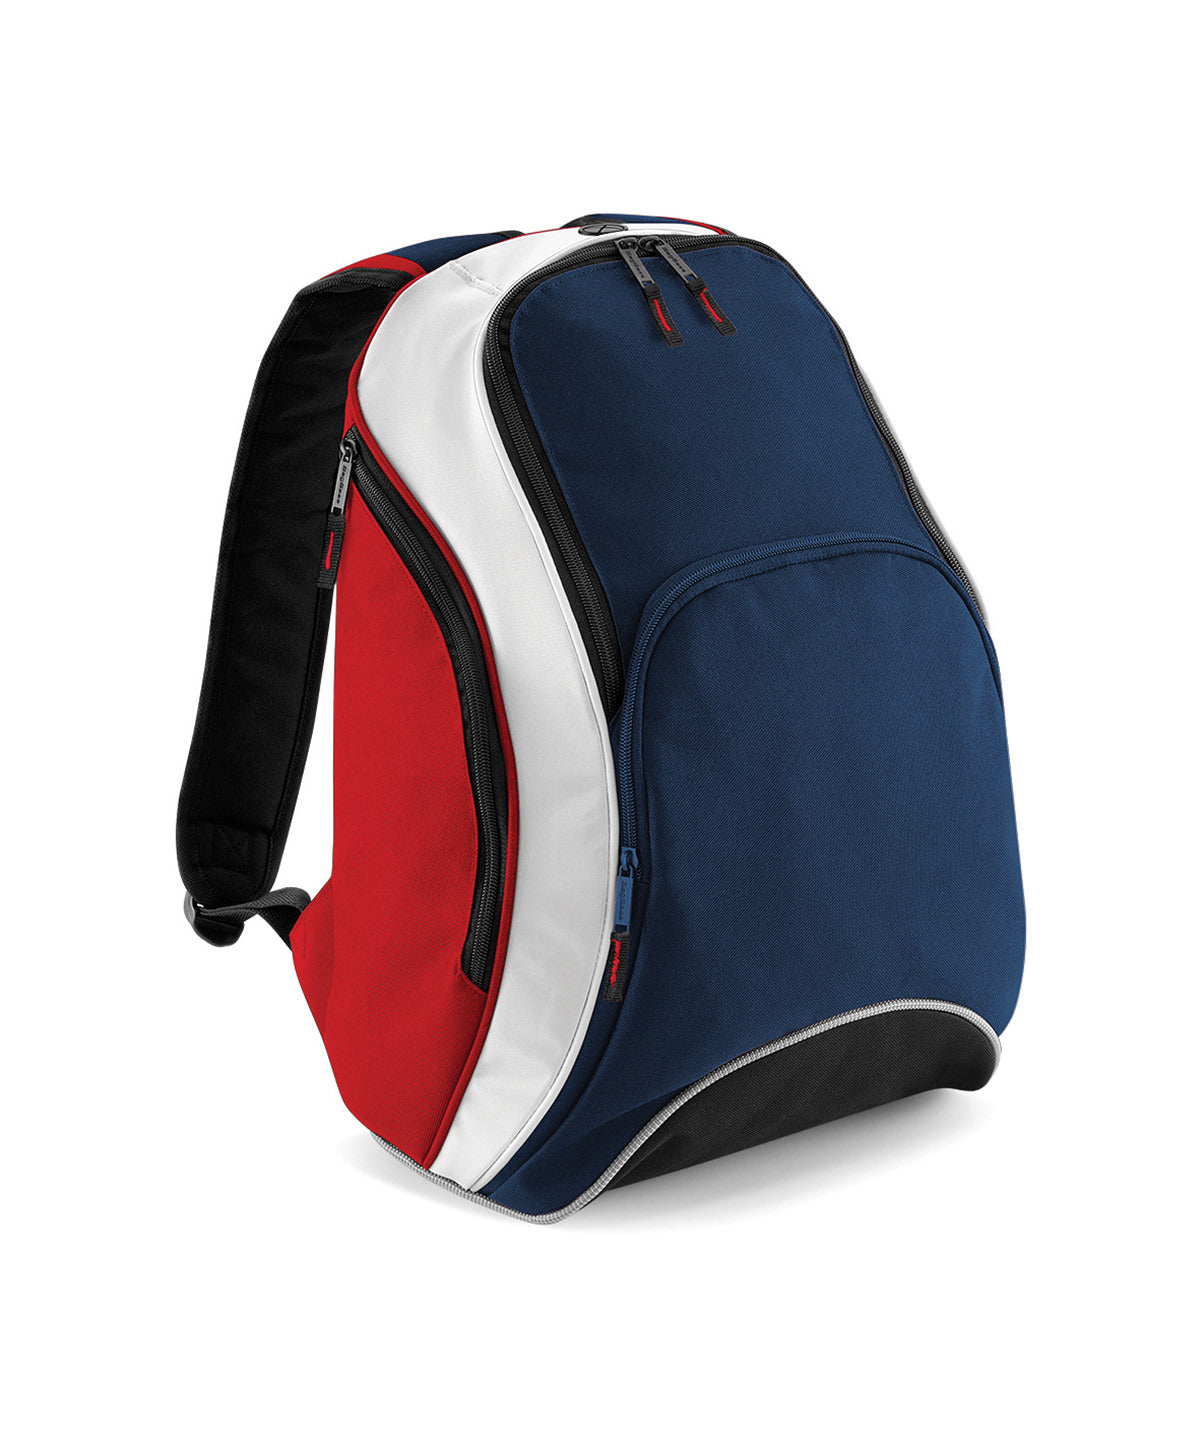 Töskur - Teamwear Backpack